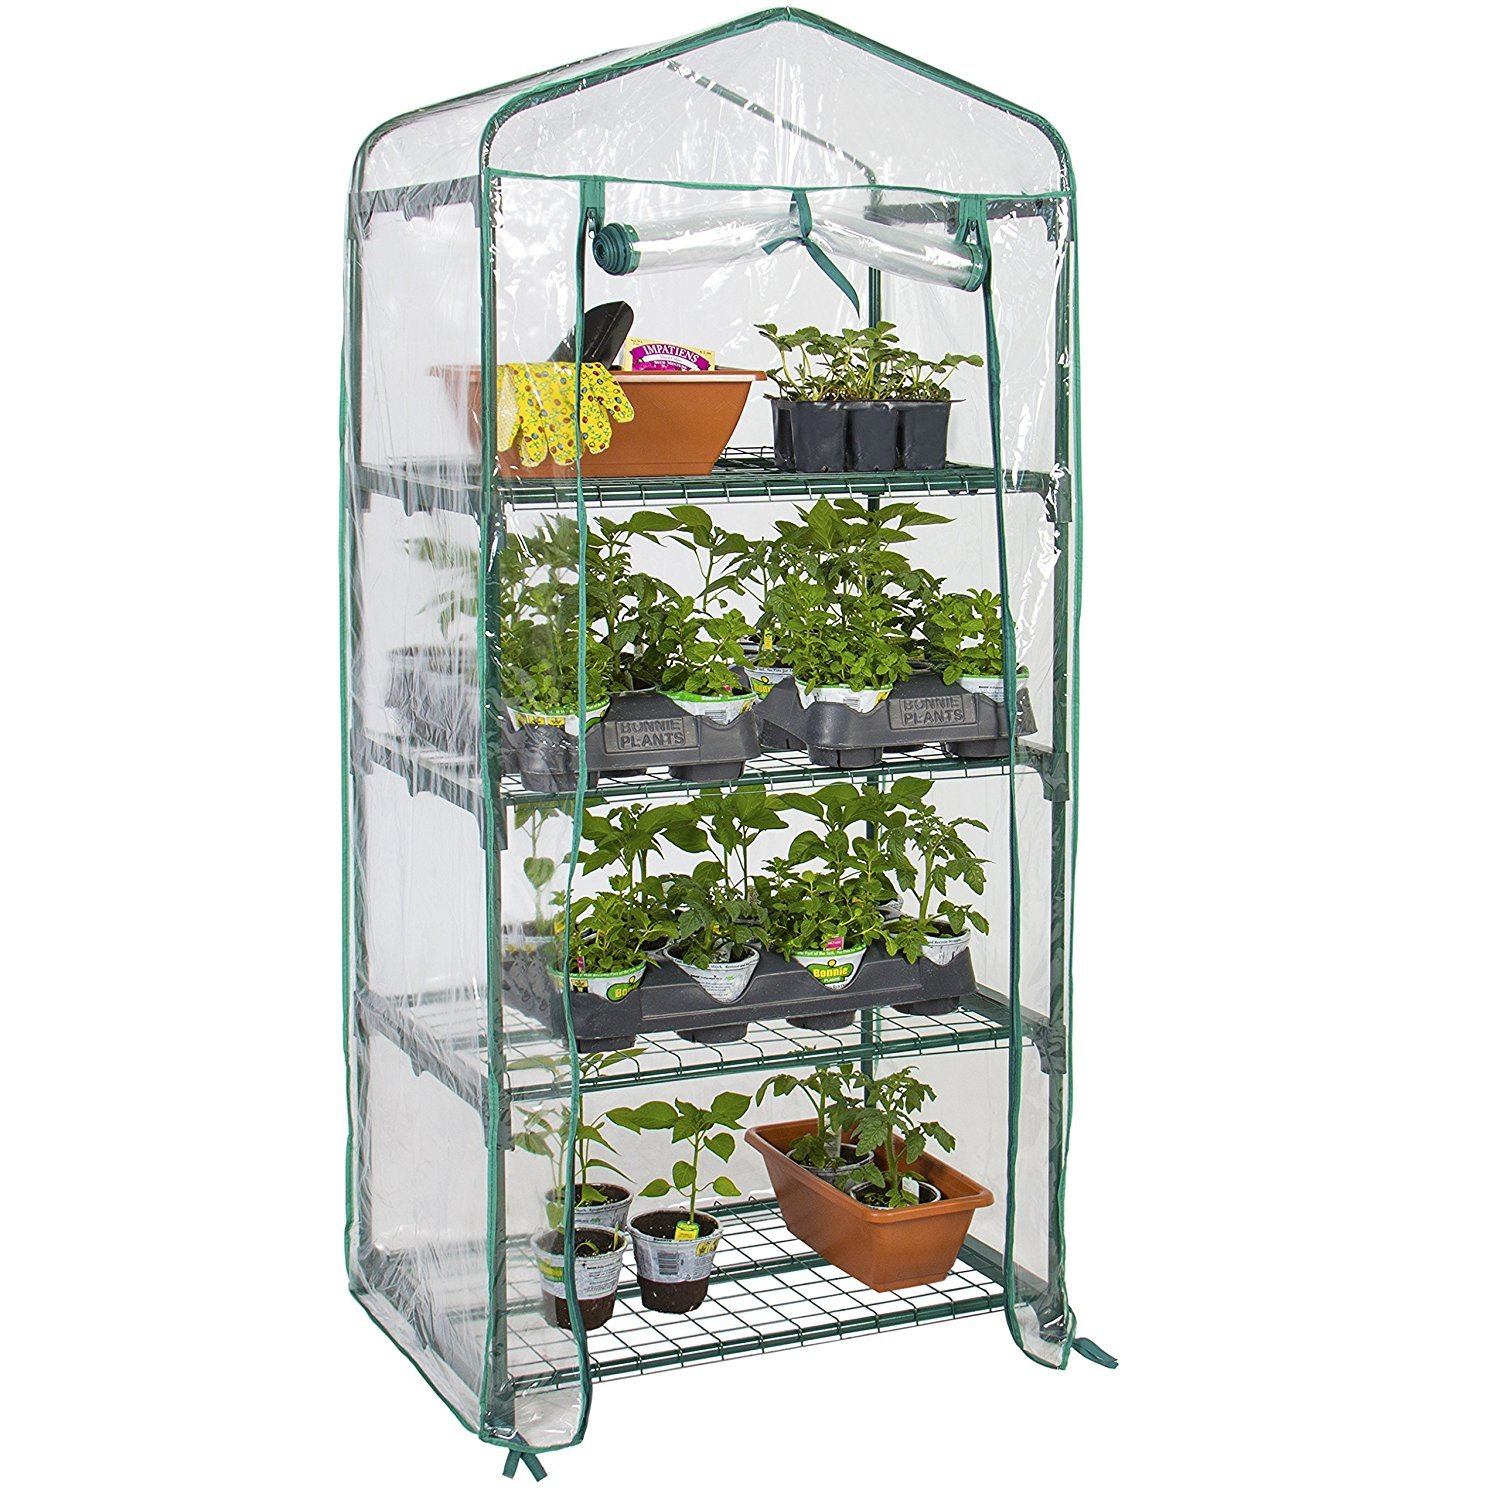 Miniature, shelf styled greenhouse with plants on each shelf